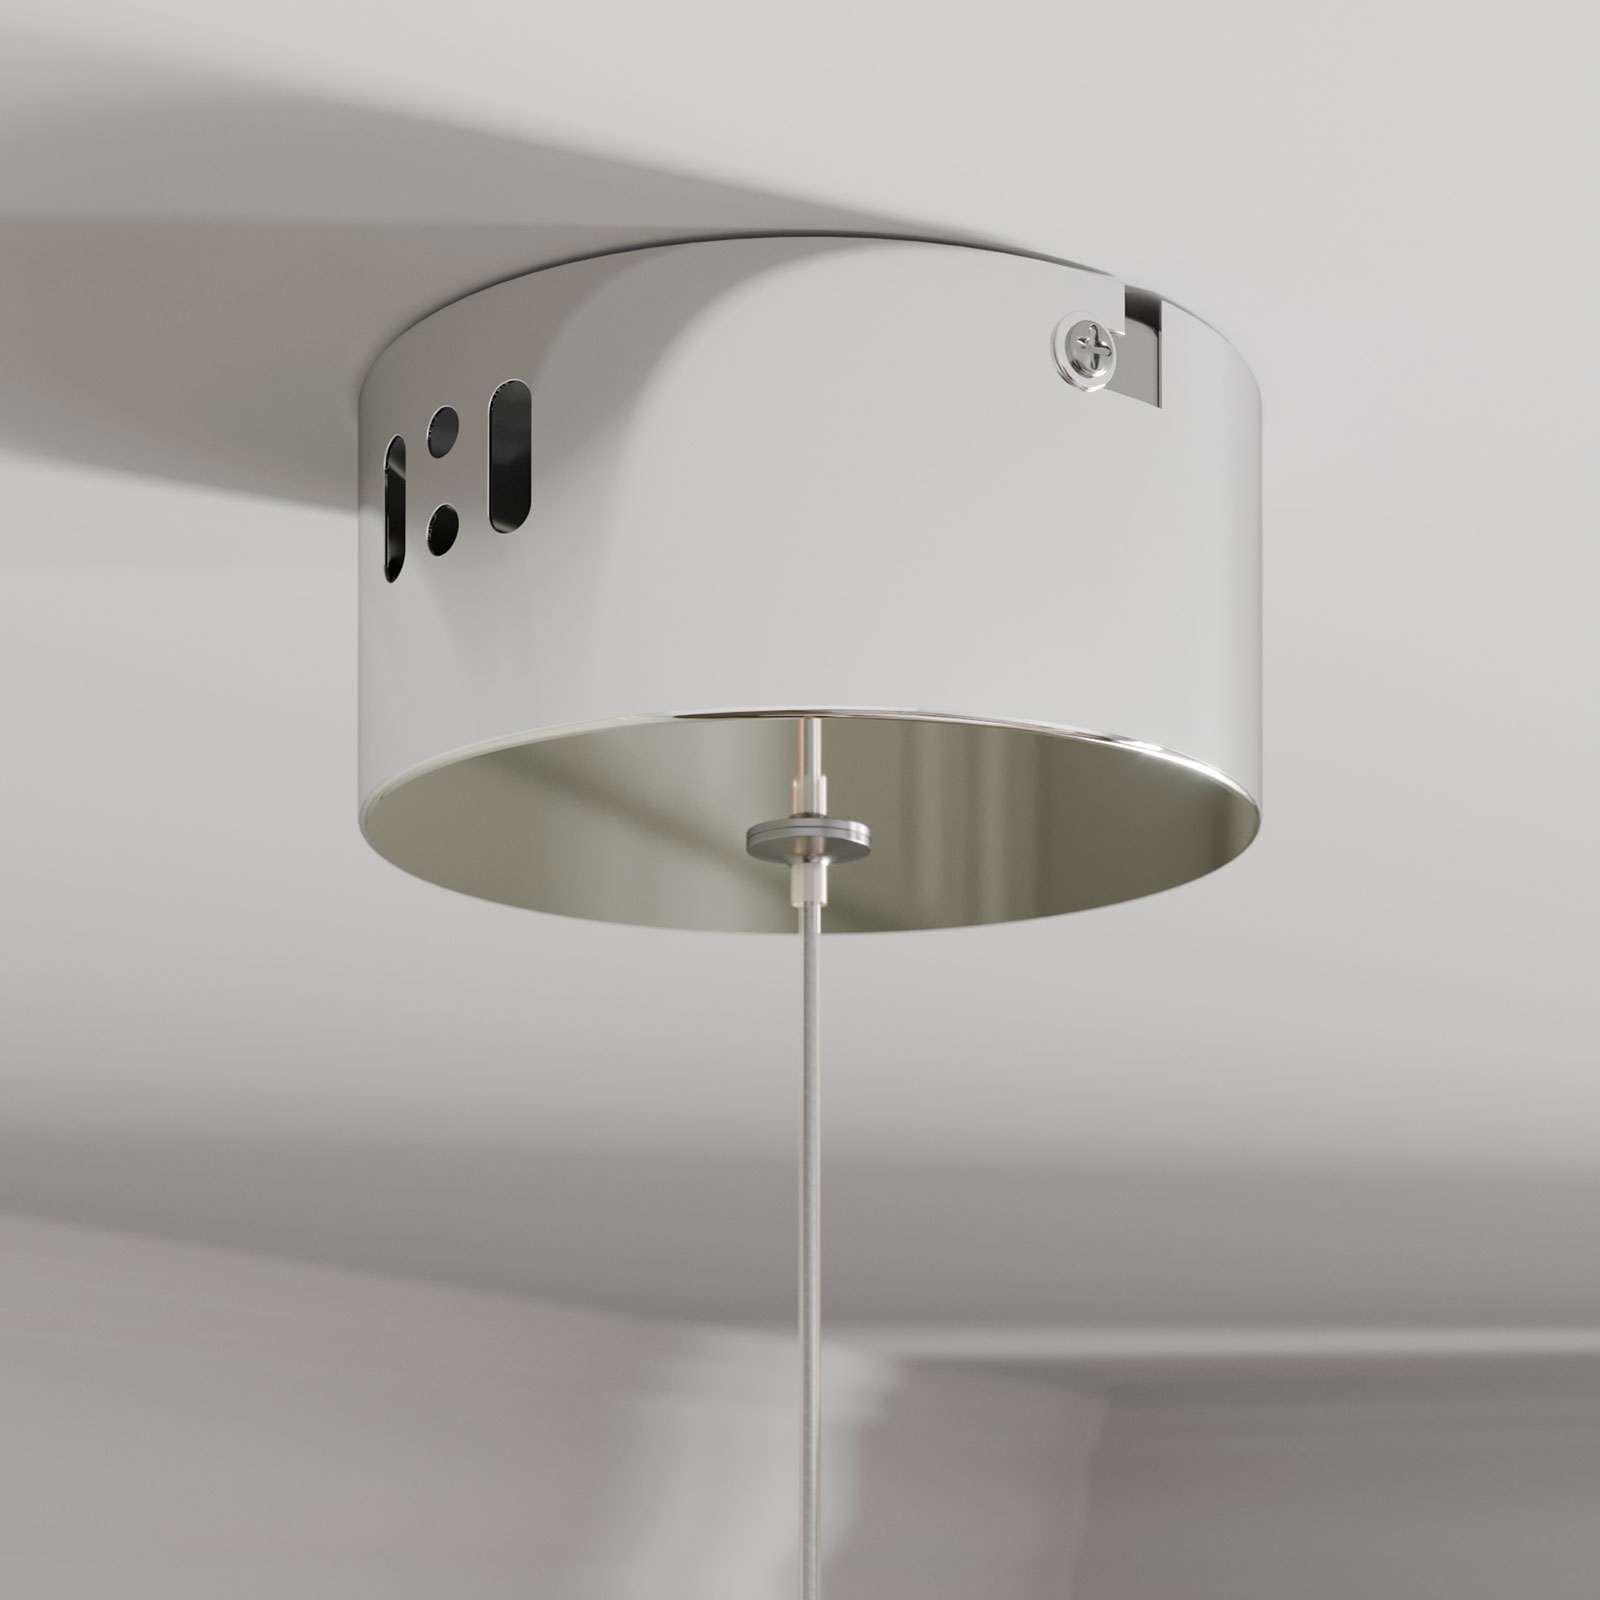 LED hanglamp Hayley met glasbol, 1 lampje, chroom